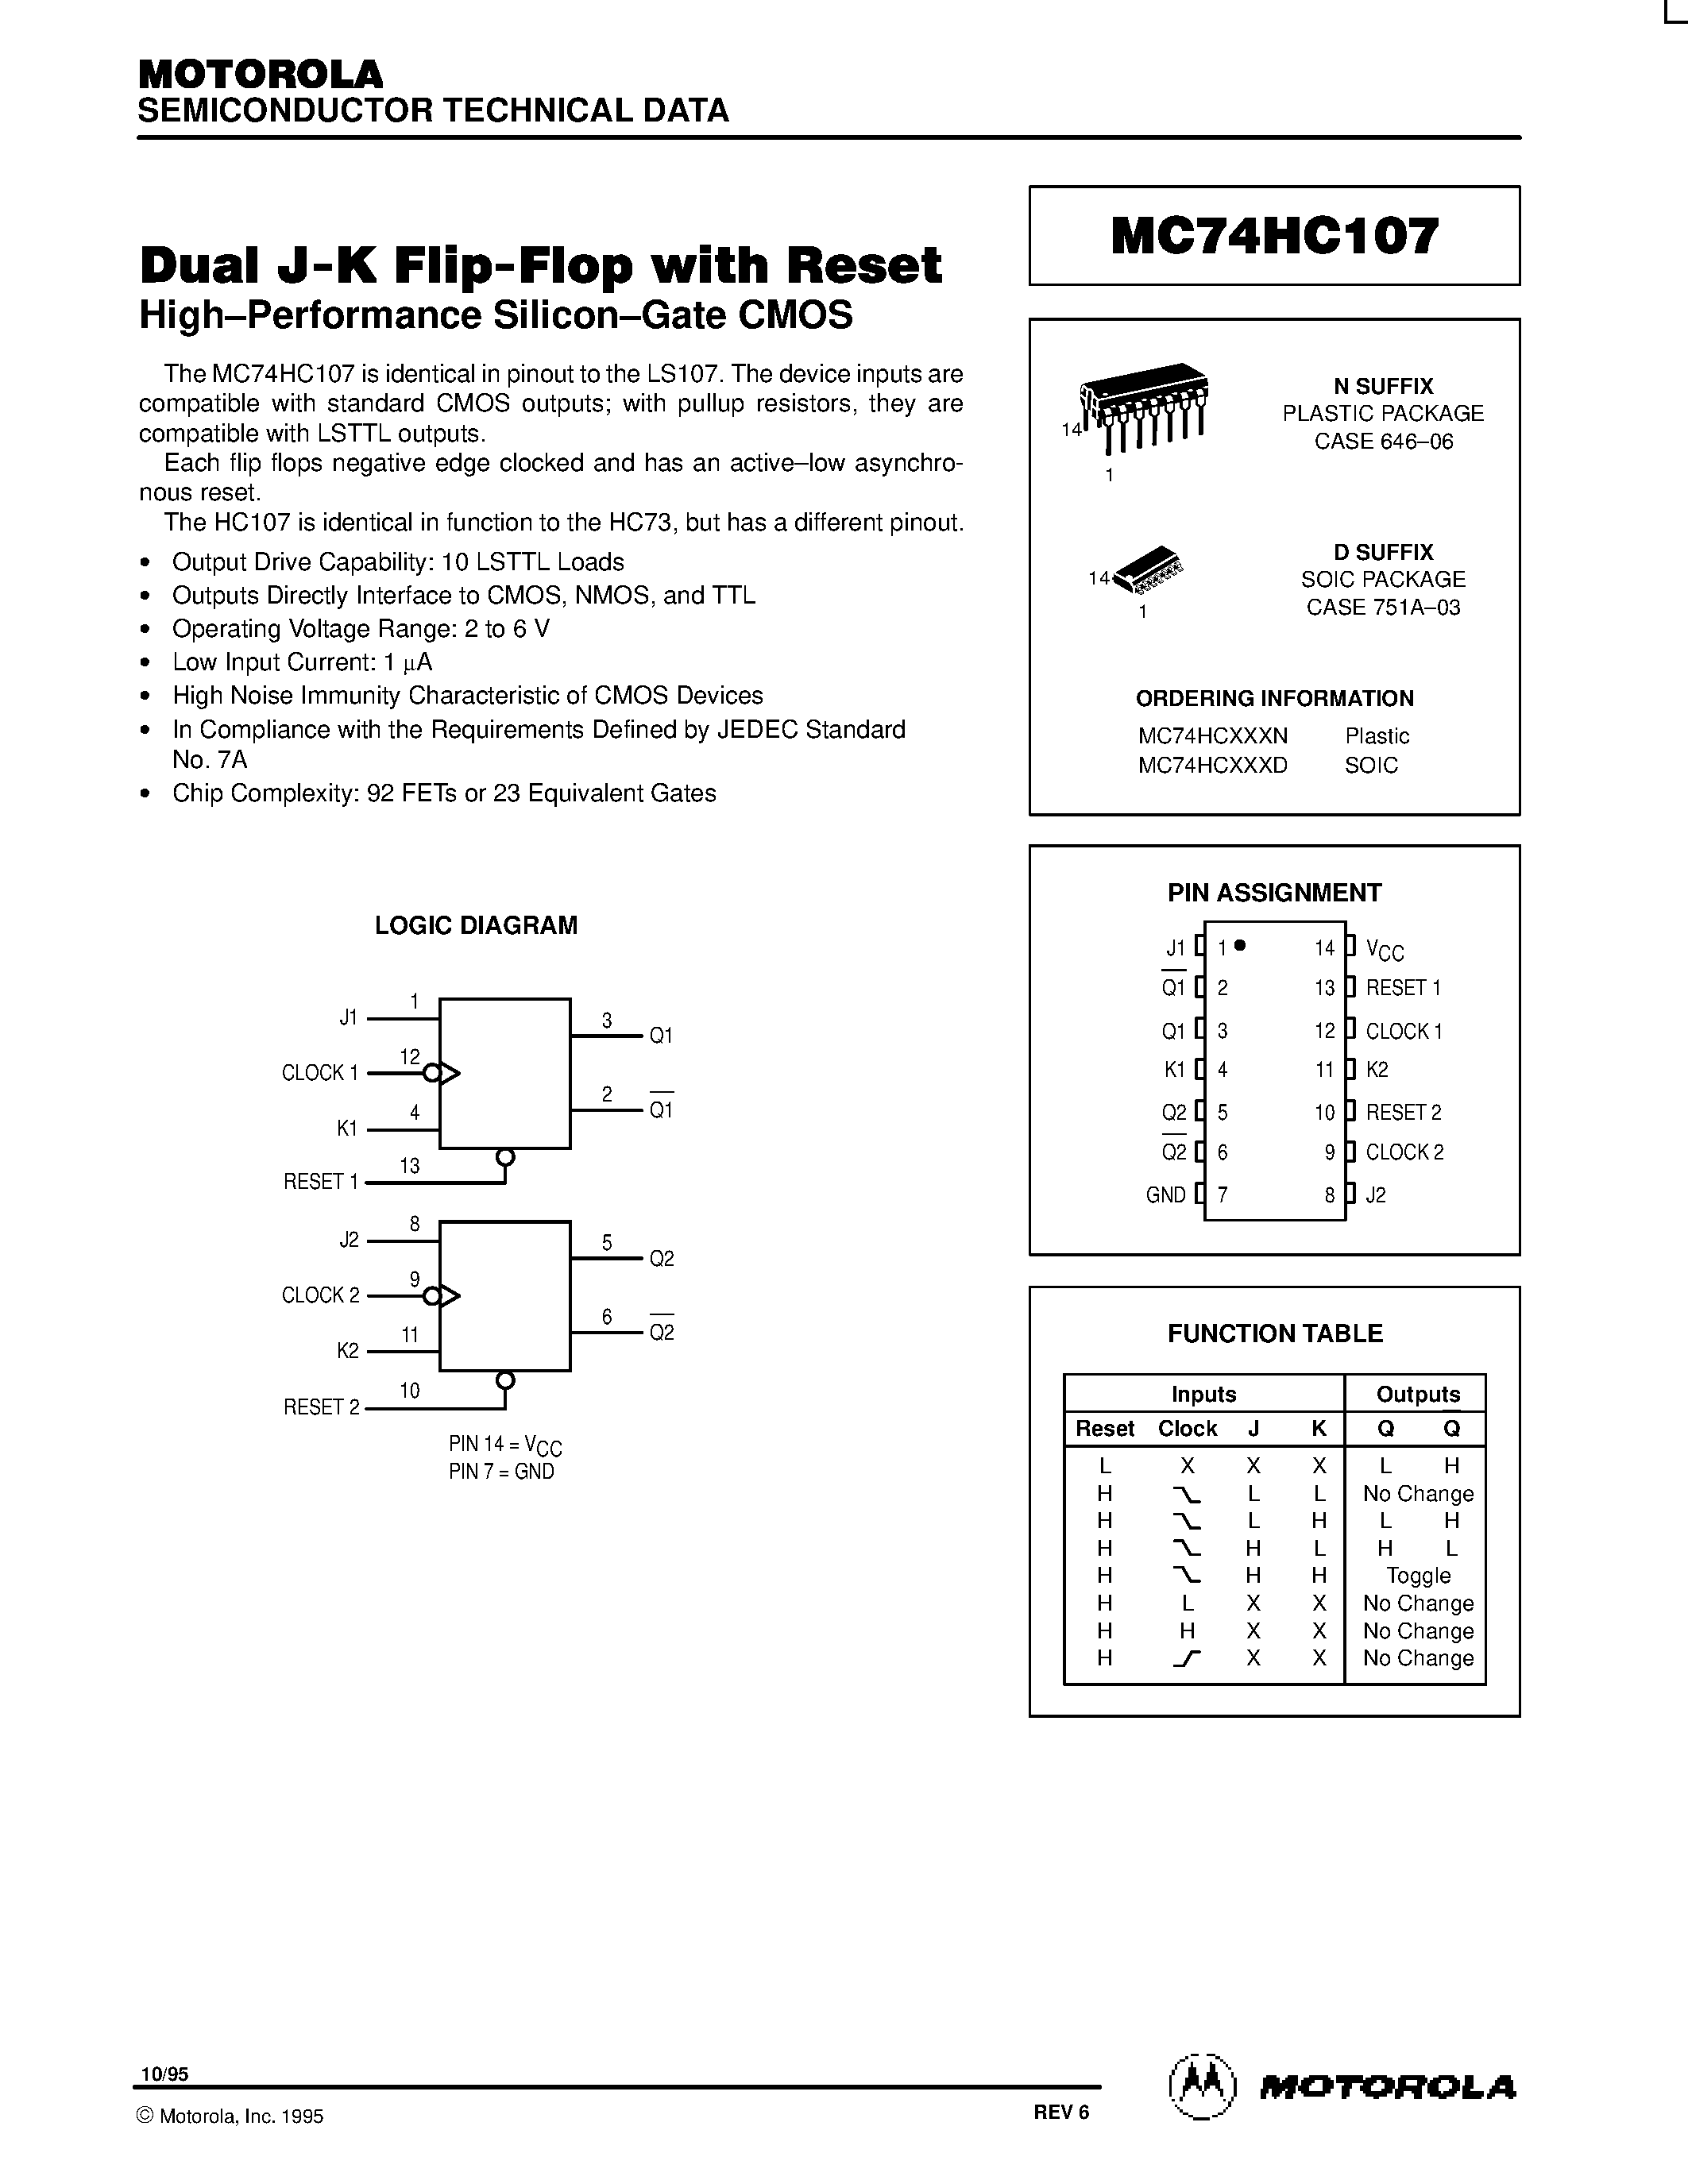 Datasheet MC75HC107 - Dual J-K Flip-Flop with Reset page 1